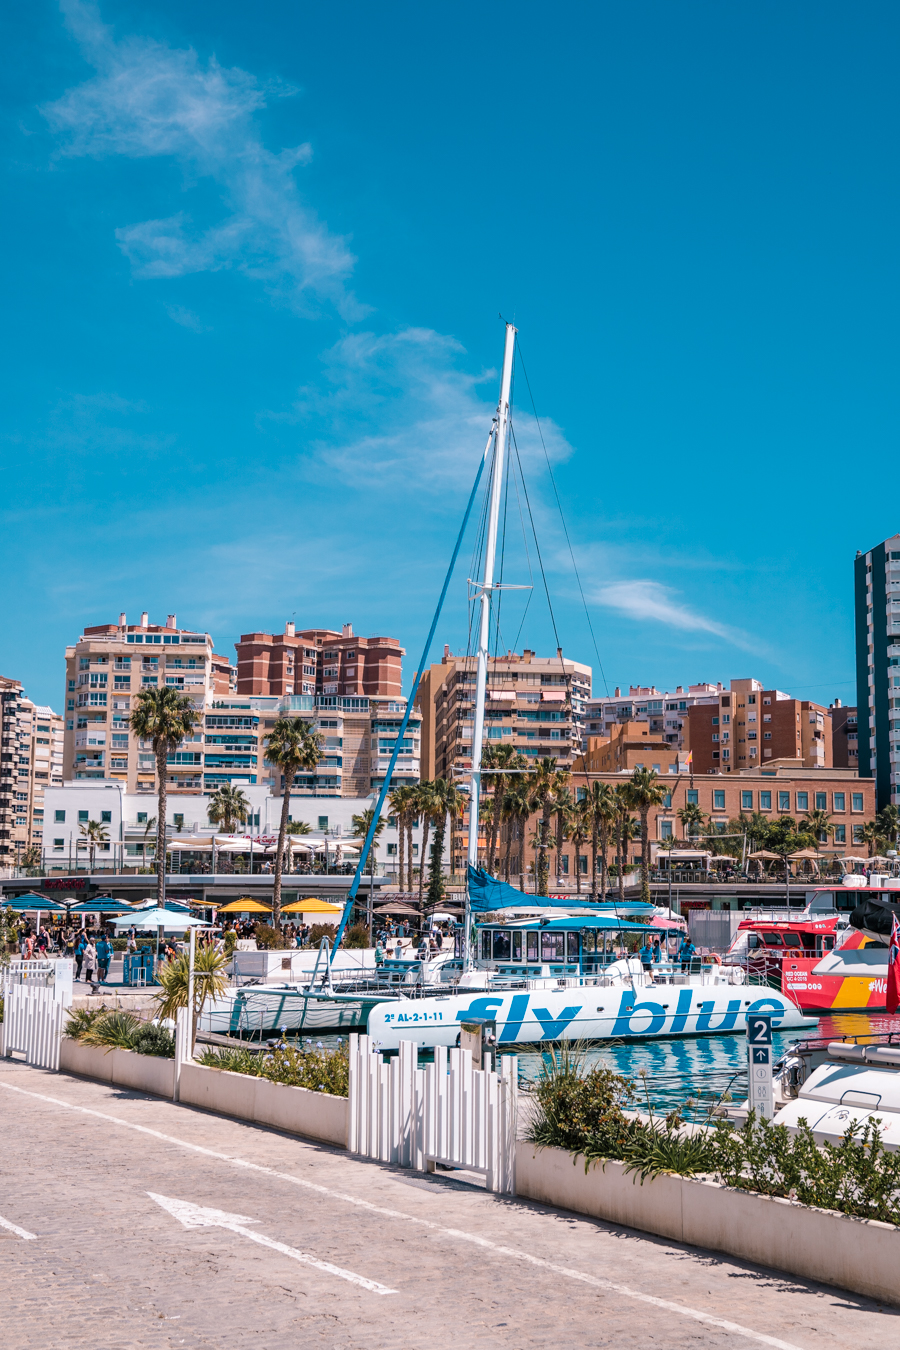 Fly blue catamaran parked in puerto de Malaga